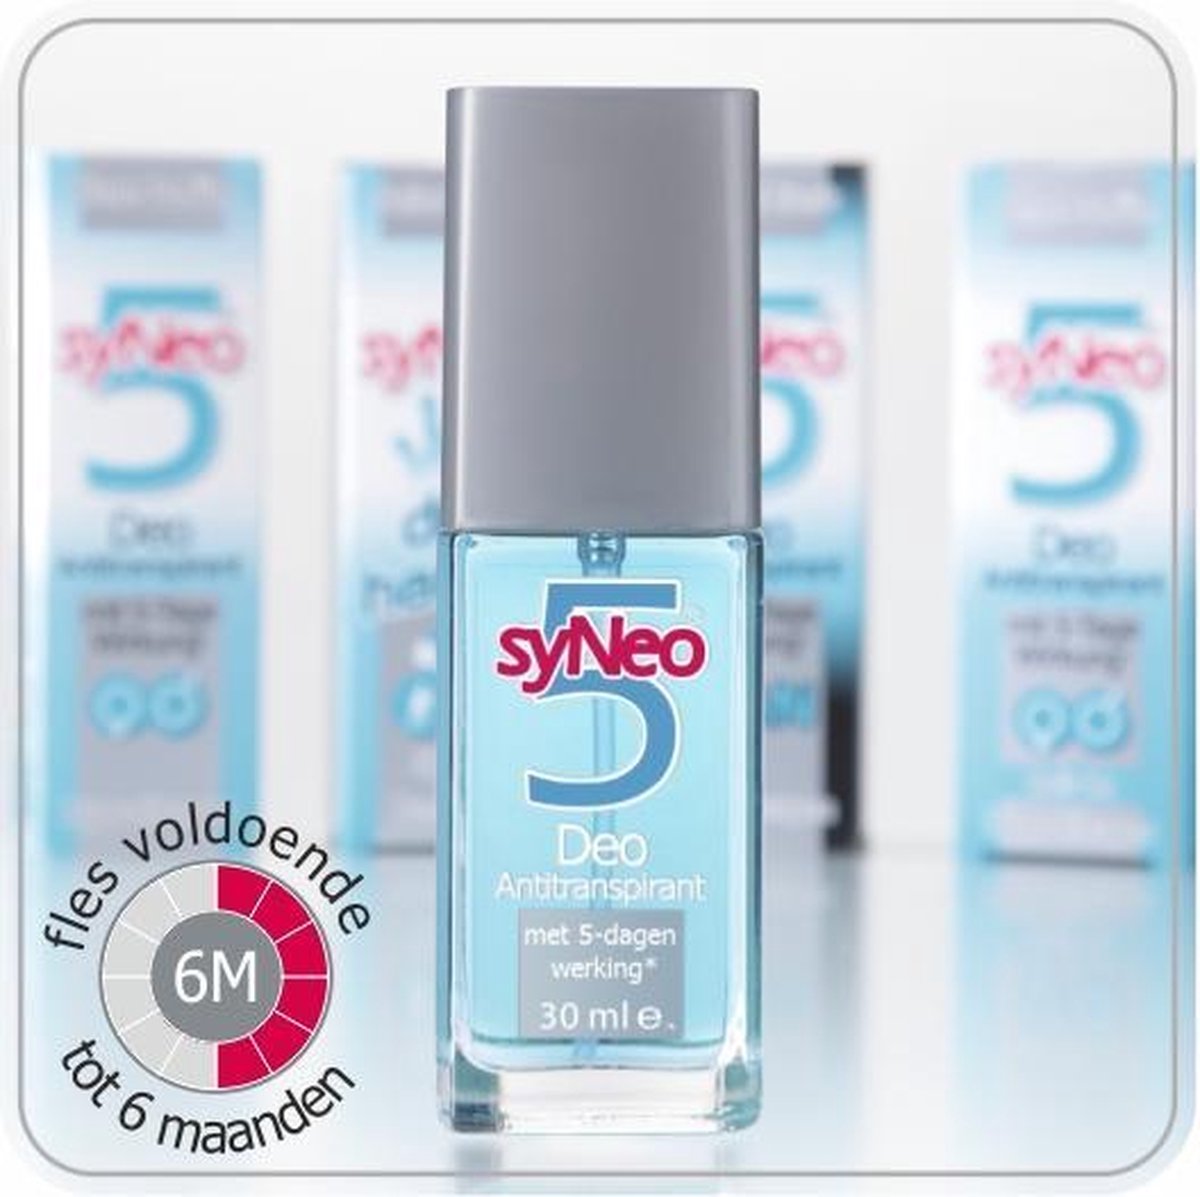 syNeo 5 Anti-Transpirant Deodorant - 30 ml | bol.com